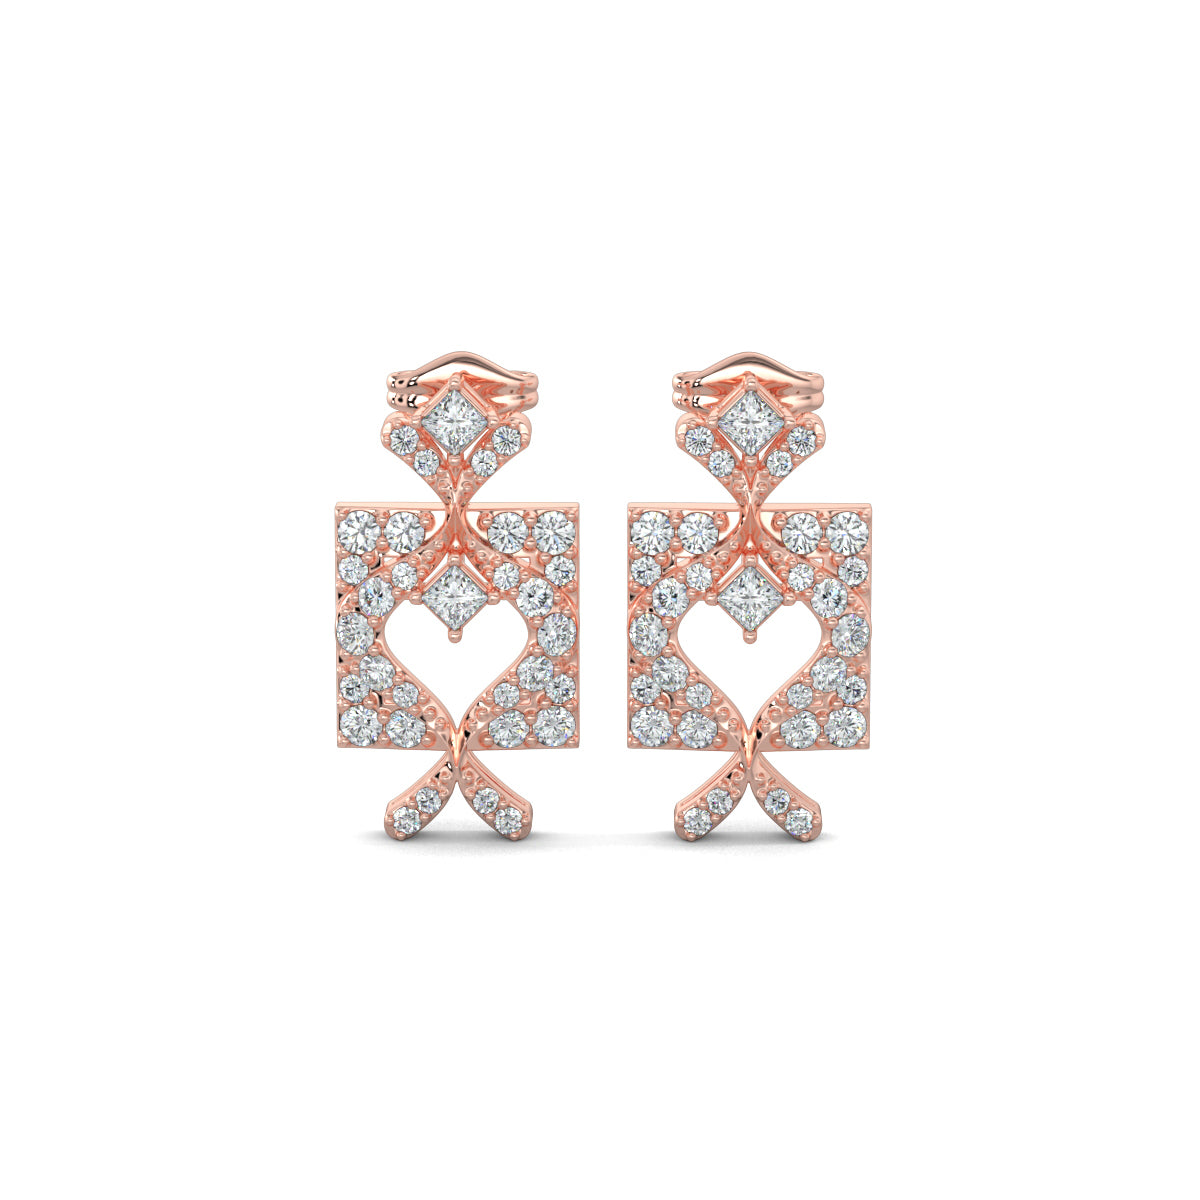 Rose Gold, Diamond Earrings, Royal Pulse Earrings, Natural Diamonds, Lab-Grown Diamonds, Square Earrings, Heart Design, Princess Diamond, Mid-Length Earrings, Sophistication, Grace, Jewelry